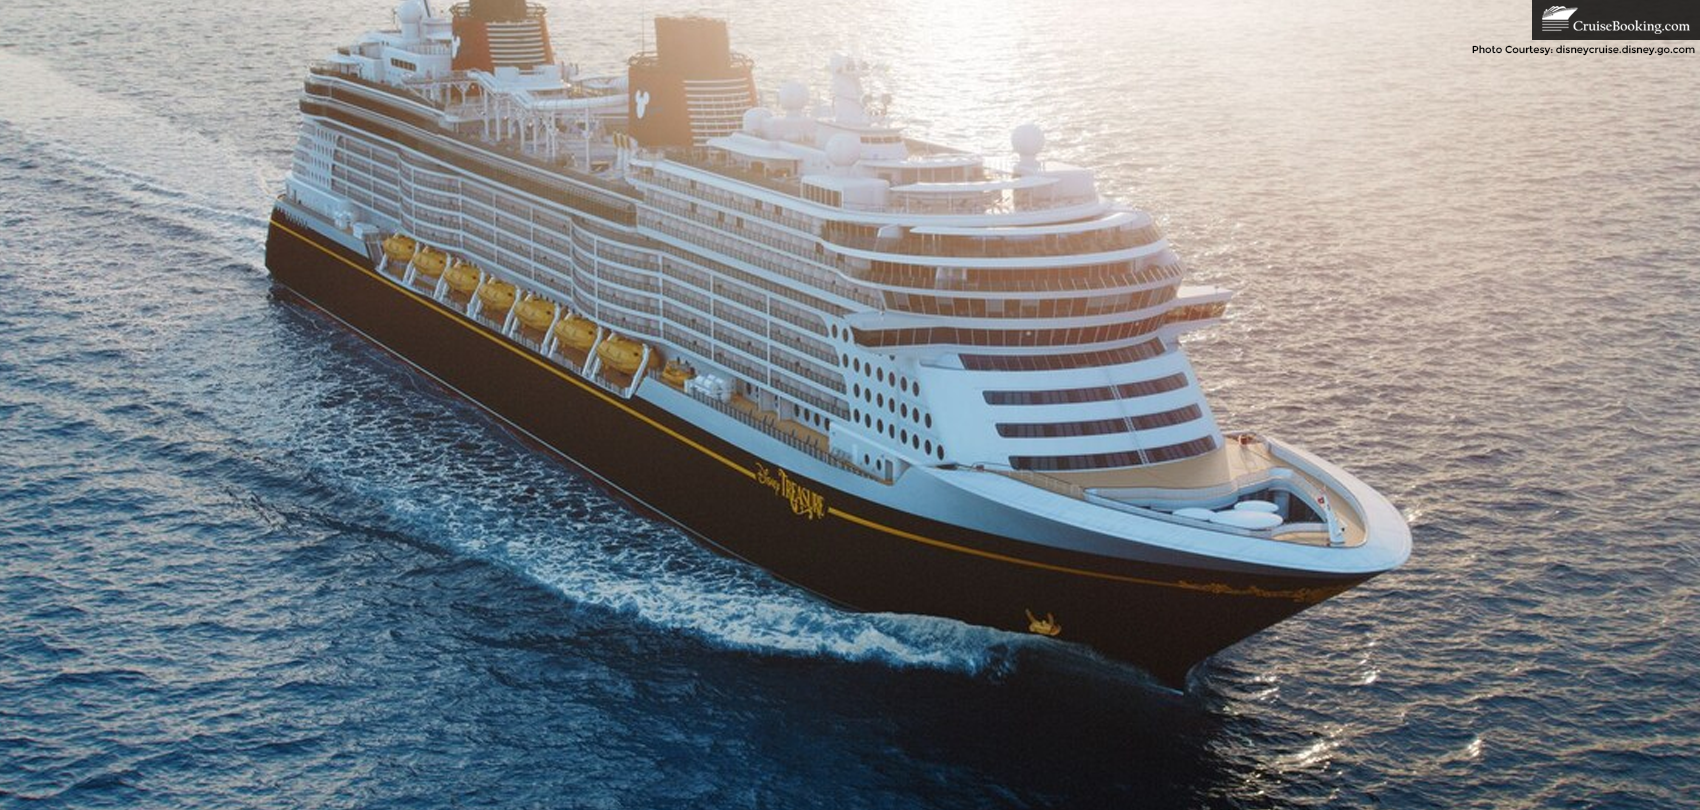 Disney Cruise Line’s Disney Adventure to Debut in Singapore in 2025